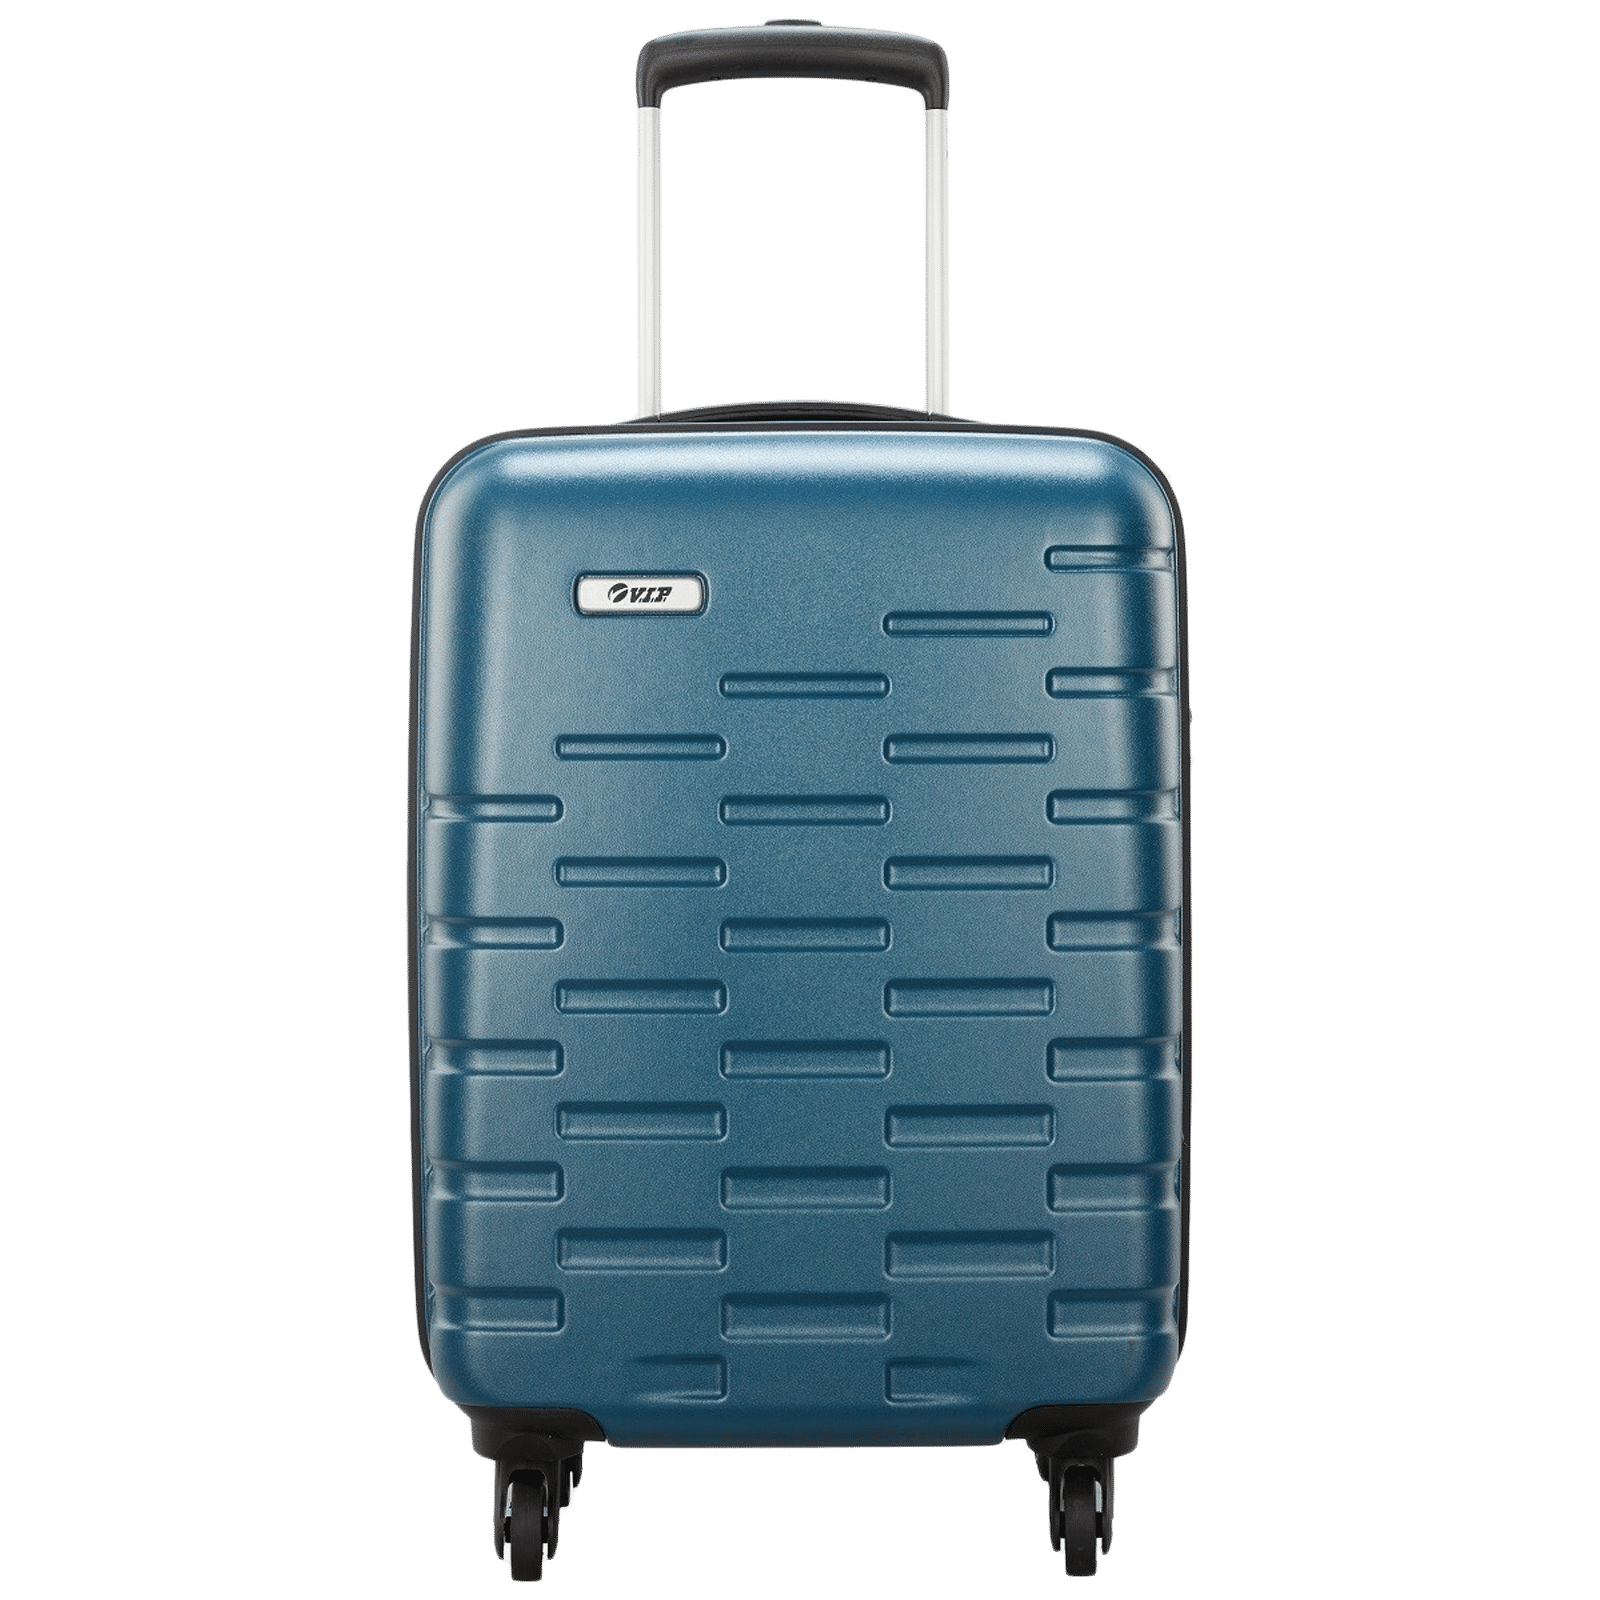 Trolley Bags Luggage for Travel (Green) - CraftShades